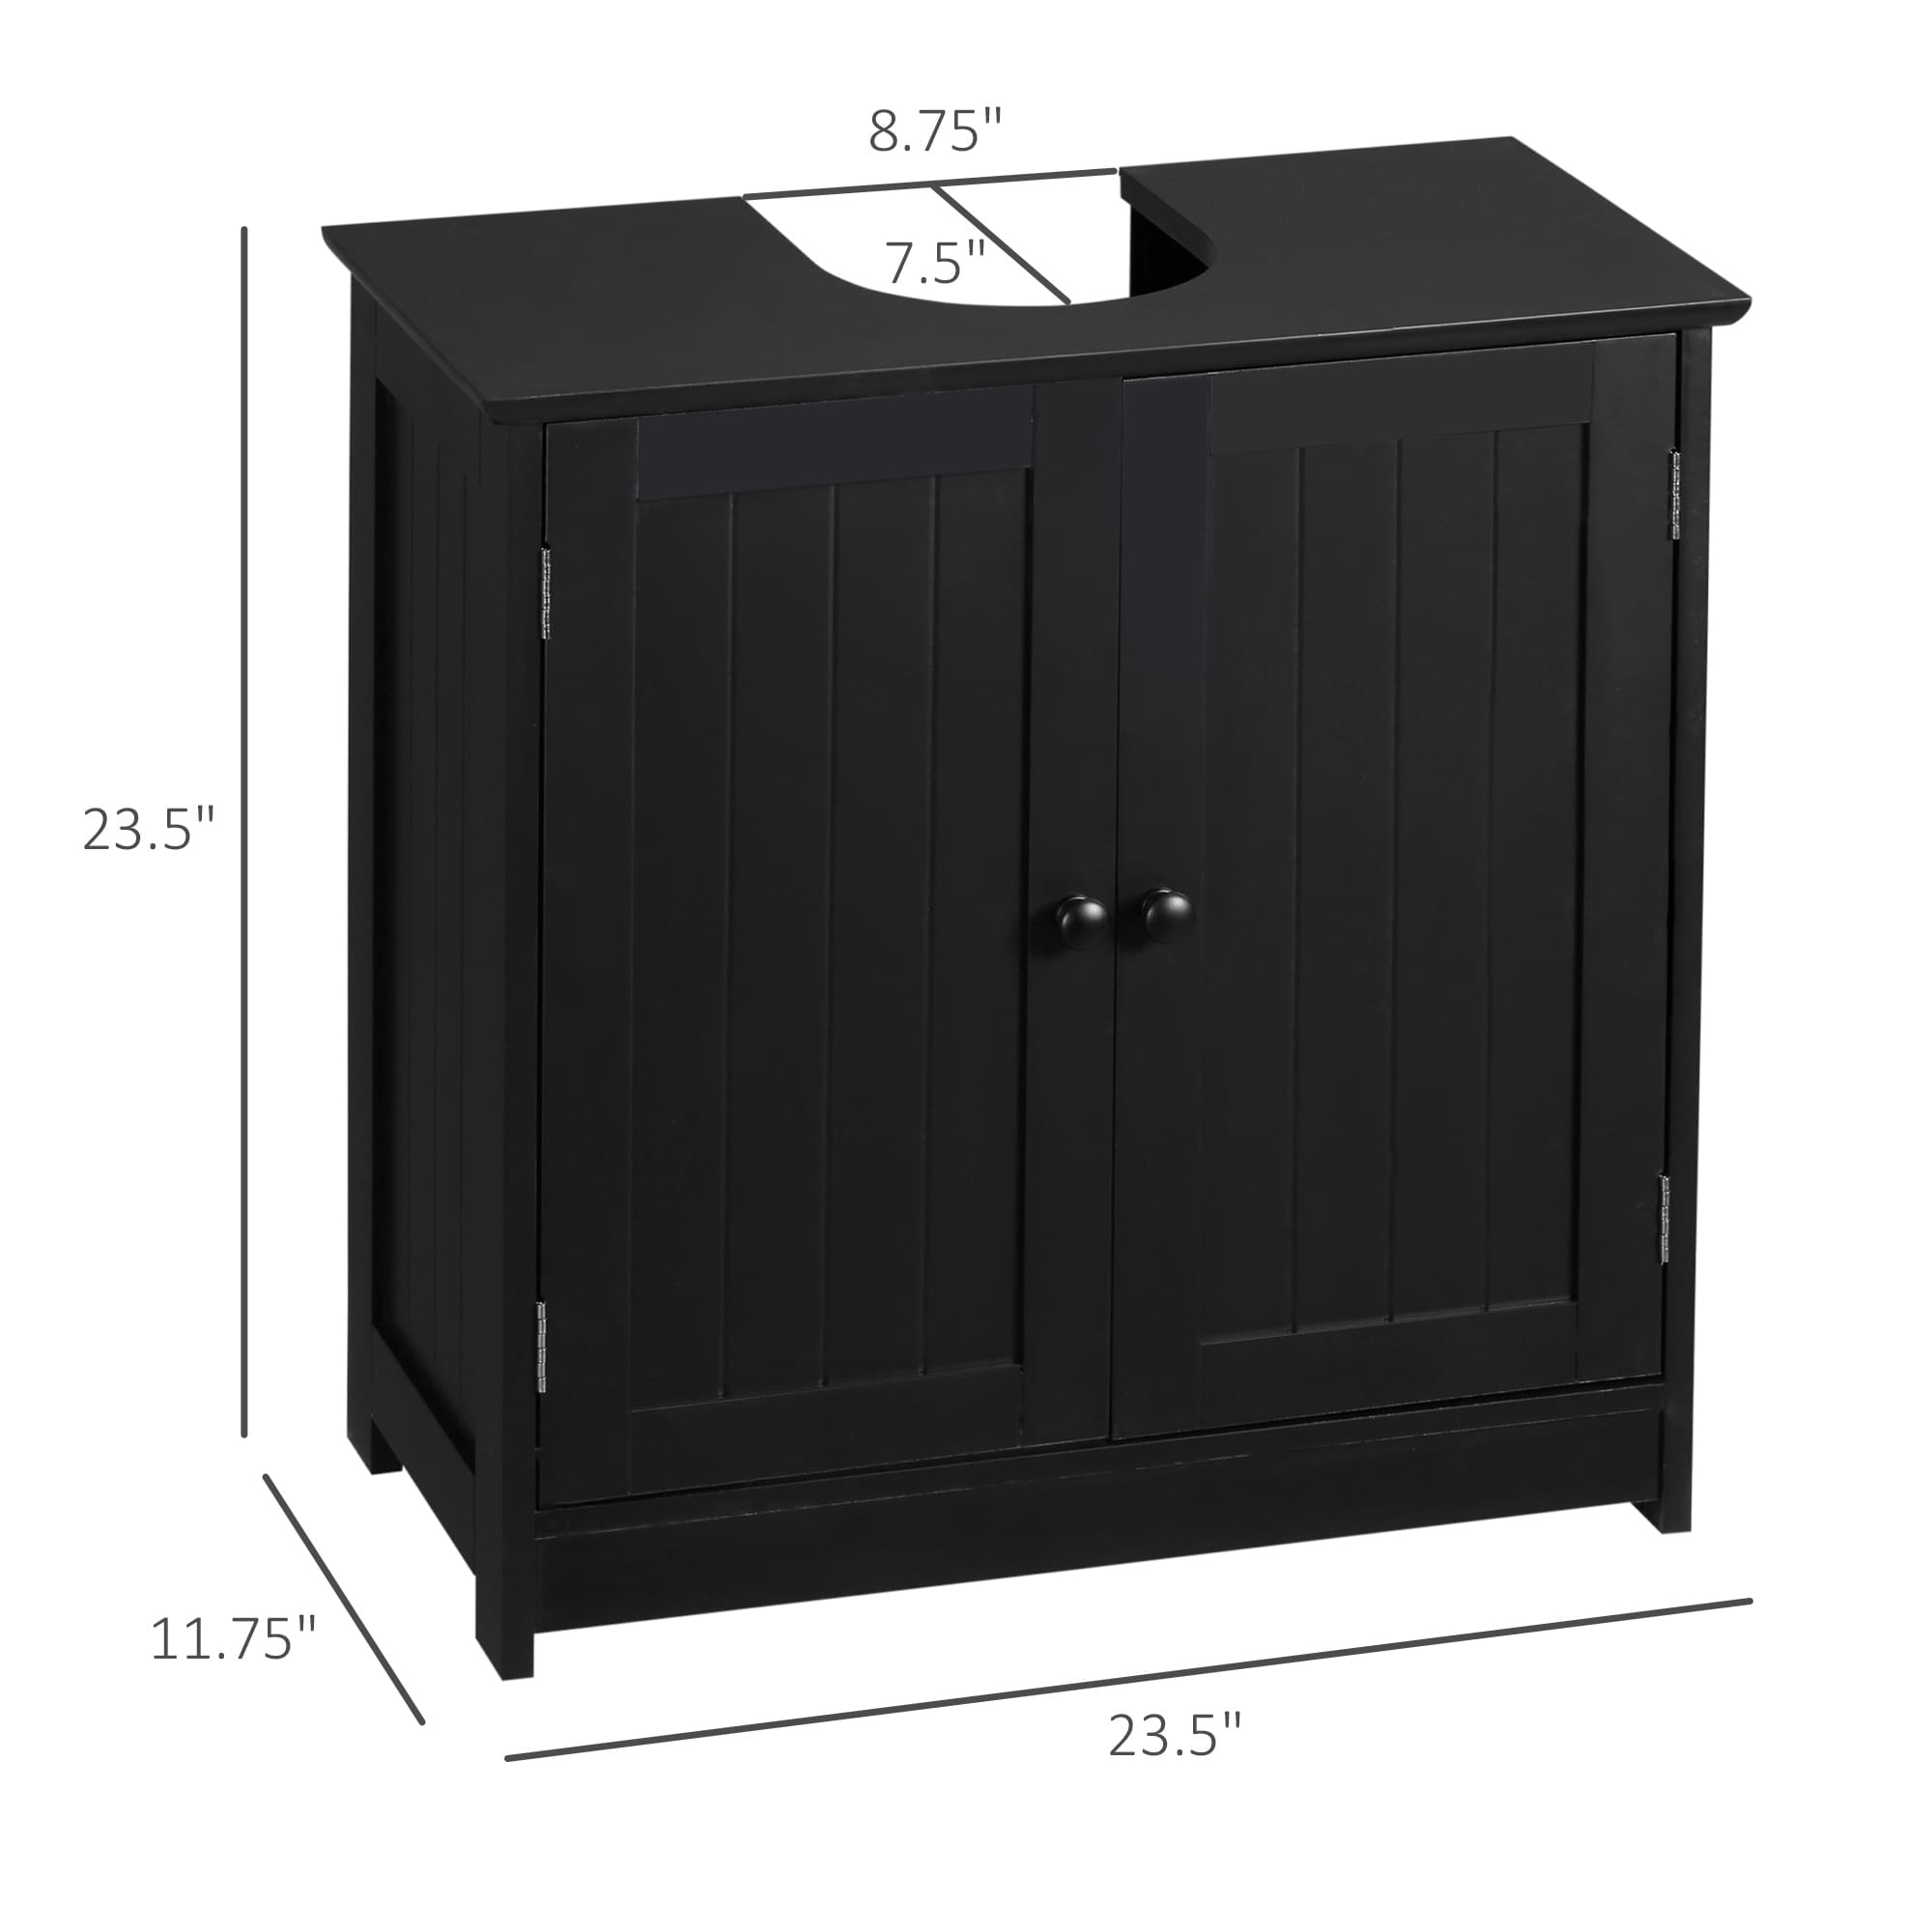 https://ak1.ostkcdn.com/images/products/is/images/direct/90bef98e5cc790ef400661e105090b9c3c934876/HOMCOM-Under-Sink-Bathroom-Cabinet-with-2-Doors-and-Shelf%2C-Pedestal-Sink-Bathroom-Vanity-Furniture.jpg